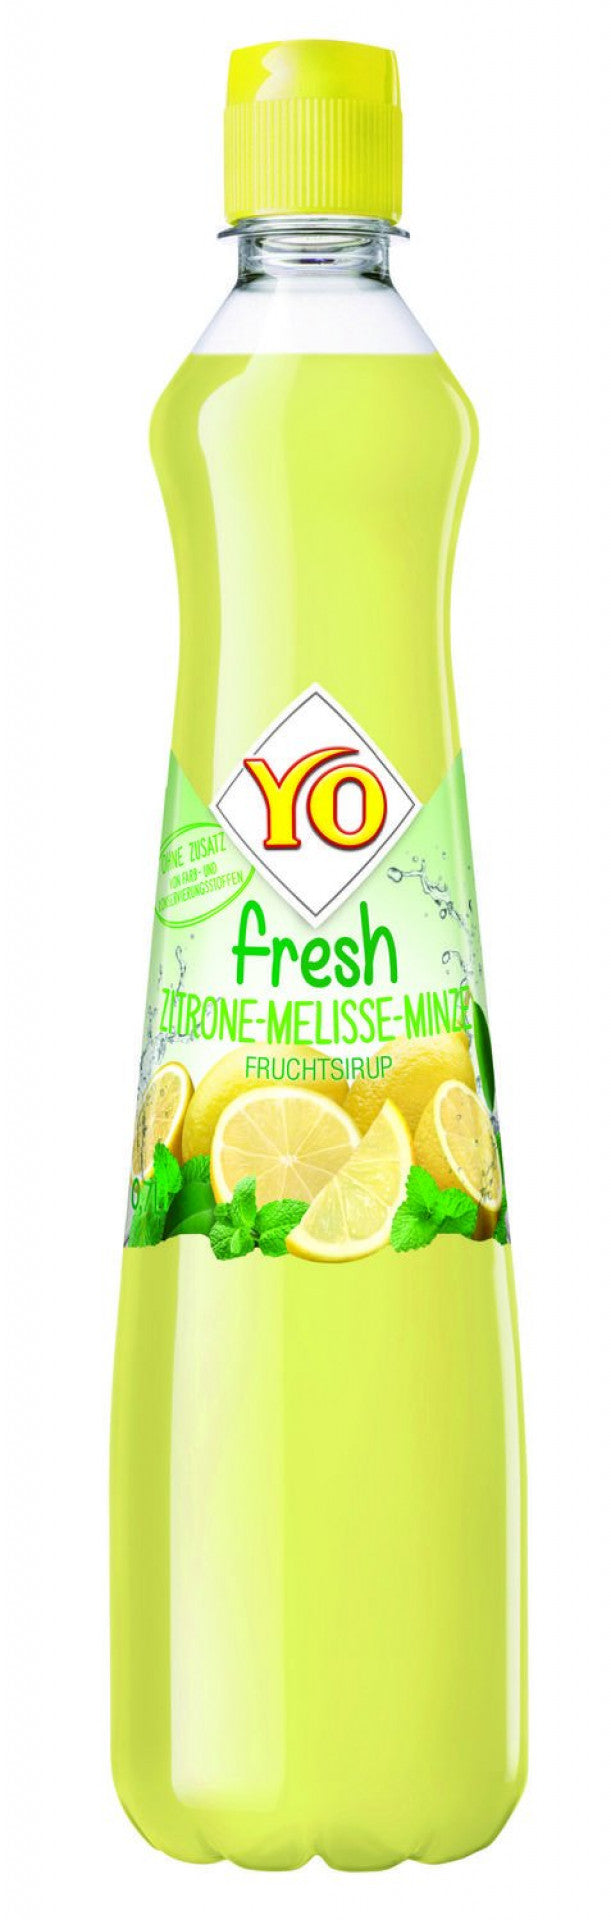 YO fresh Sirup Zitrone-Melisse-Minze